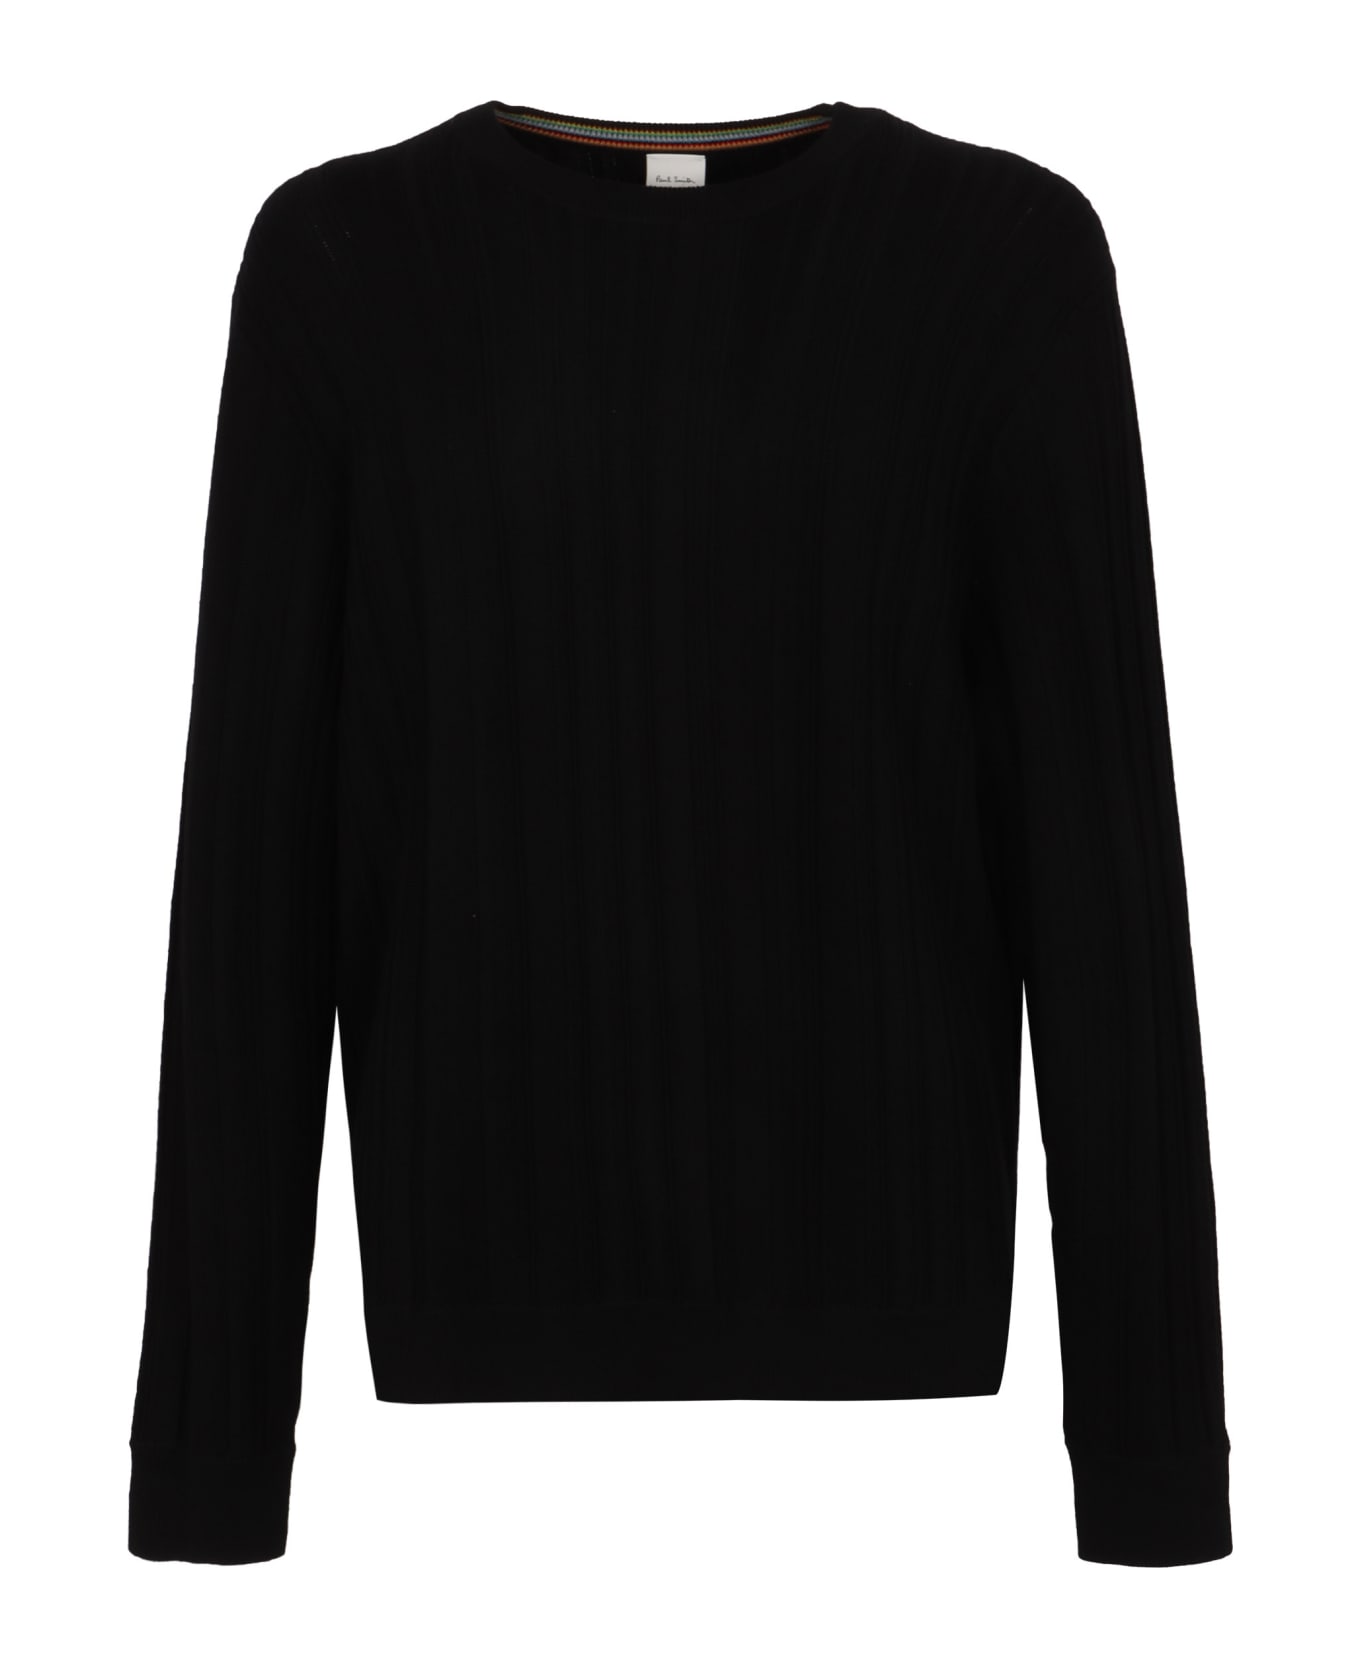 Paul Smith Merino Wool Sweater - black